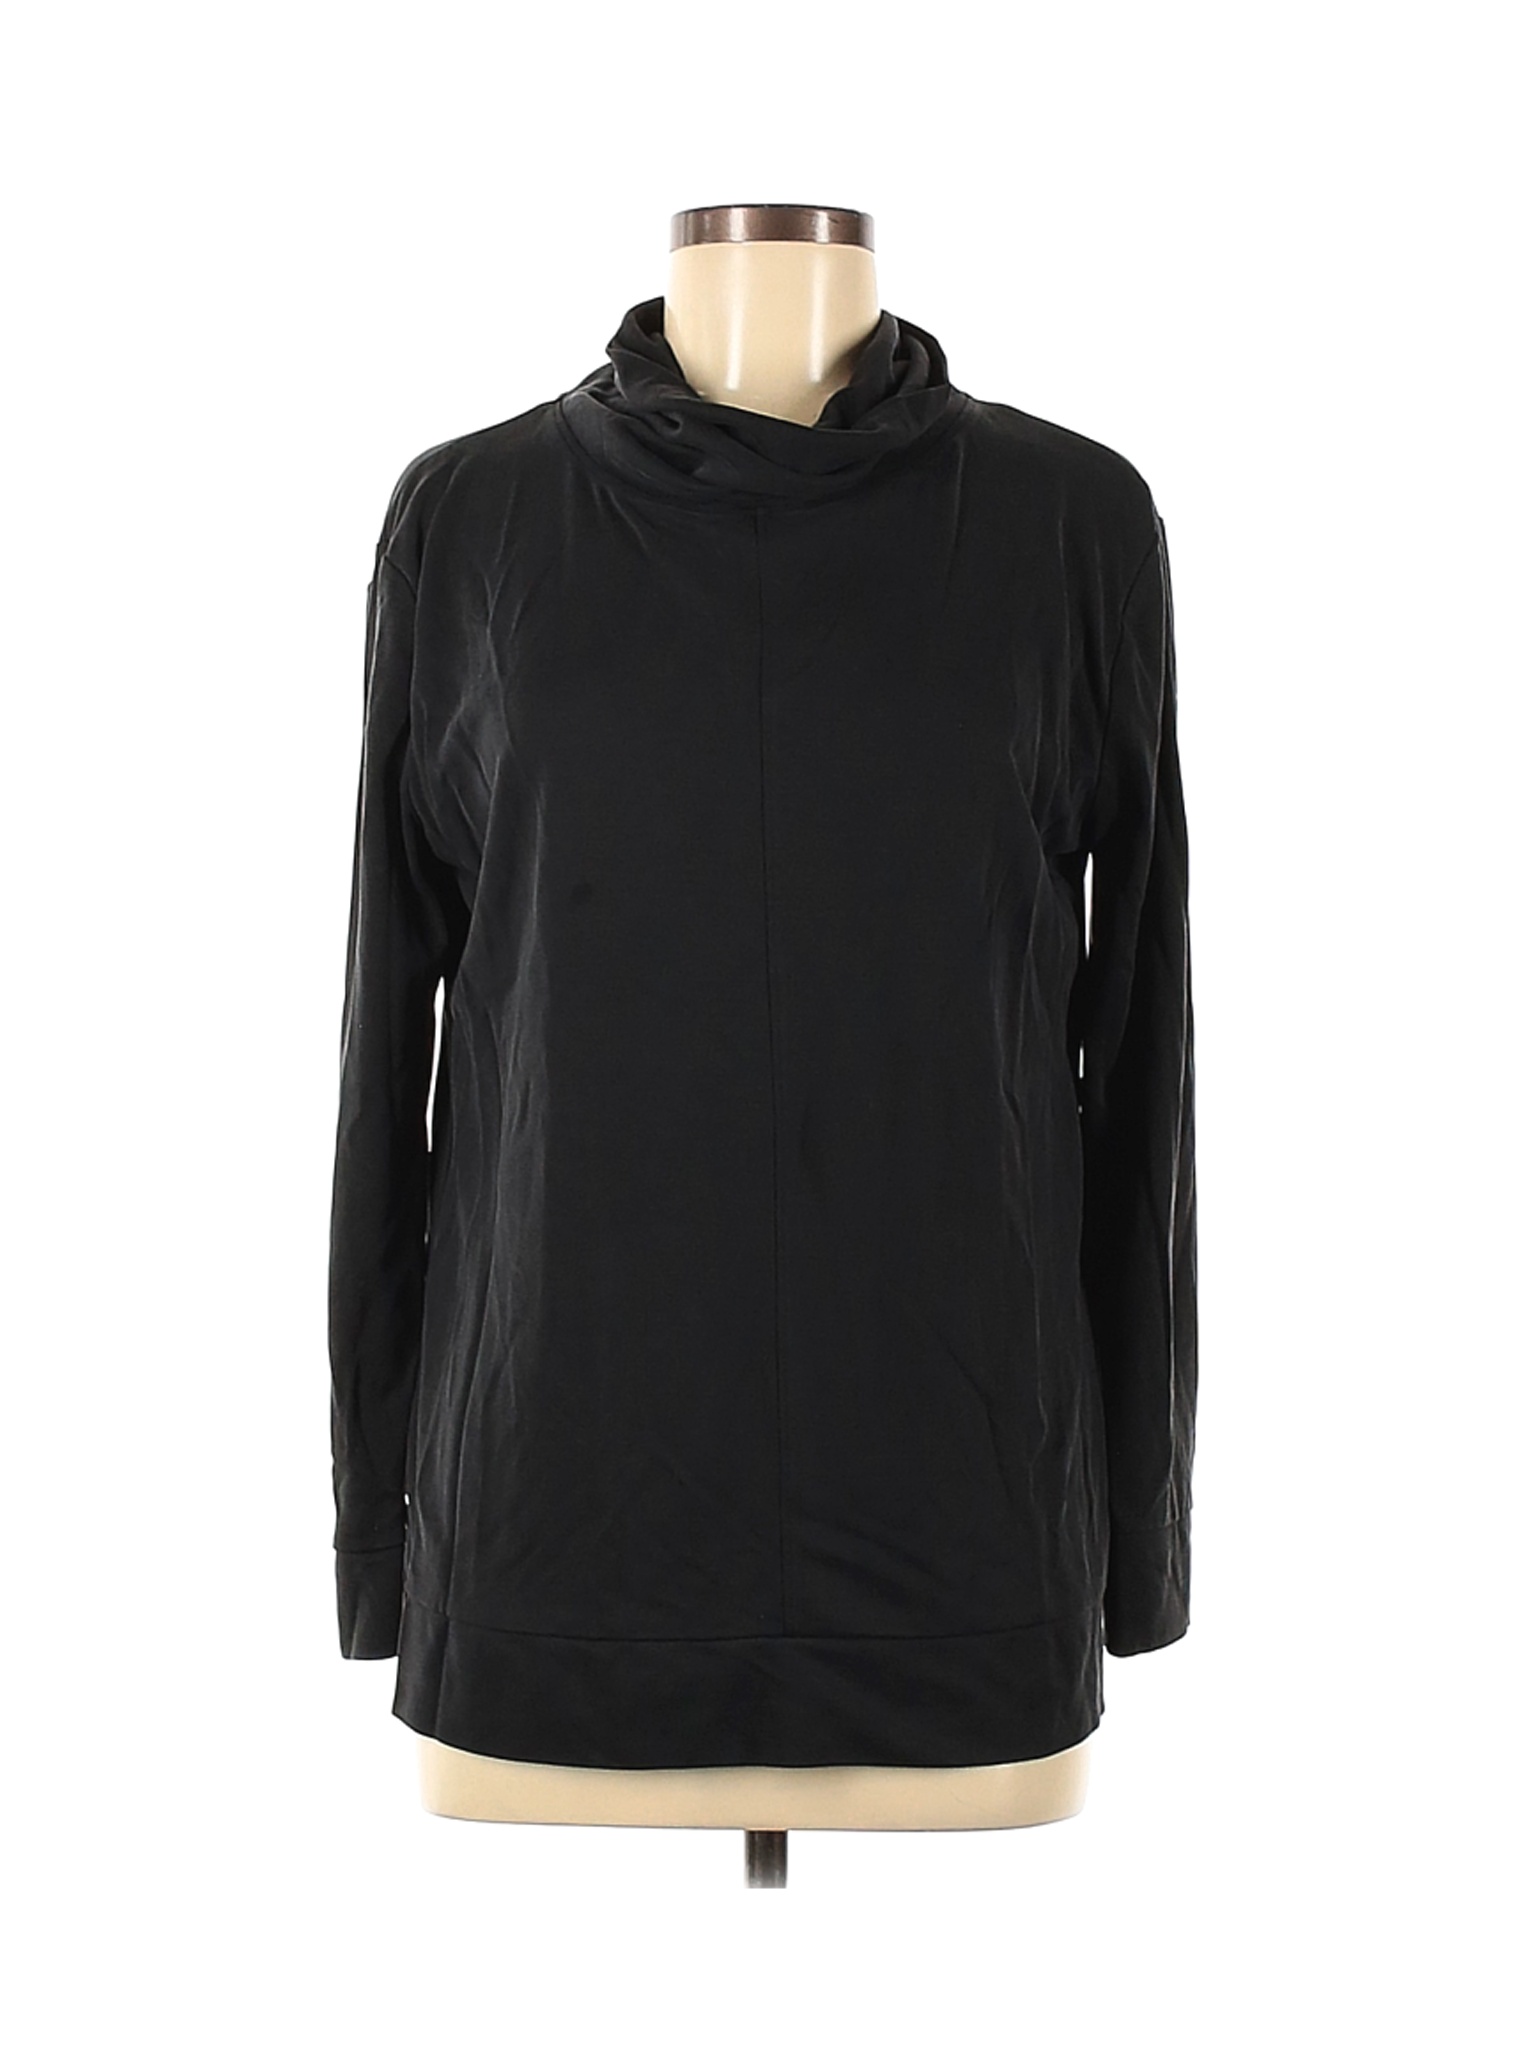 A New Day Women Black Long Sleeve T-Shirt M | eBay